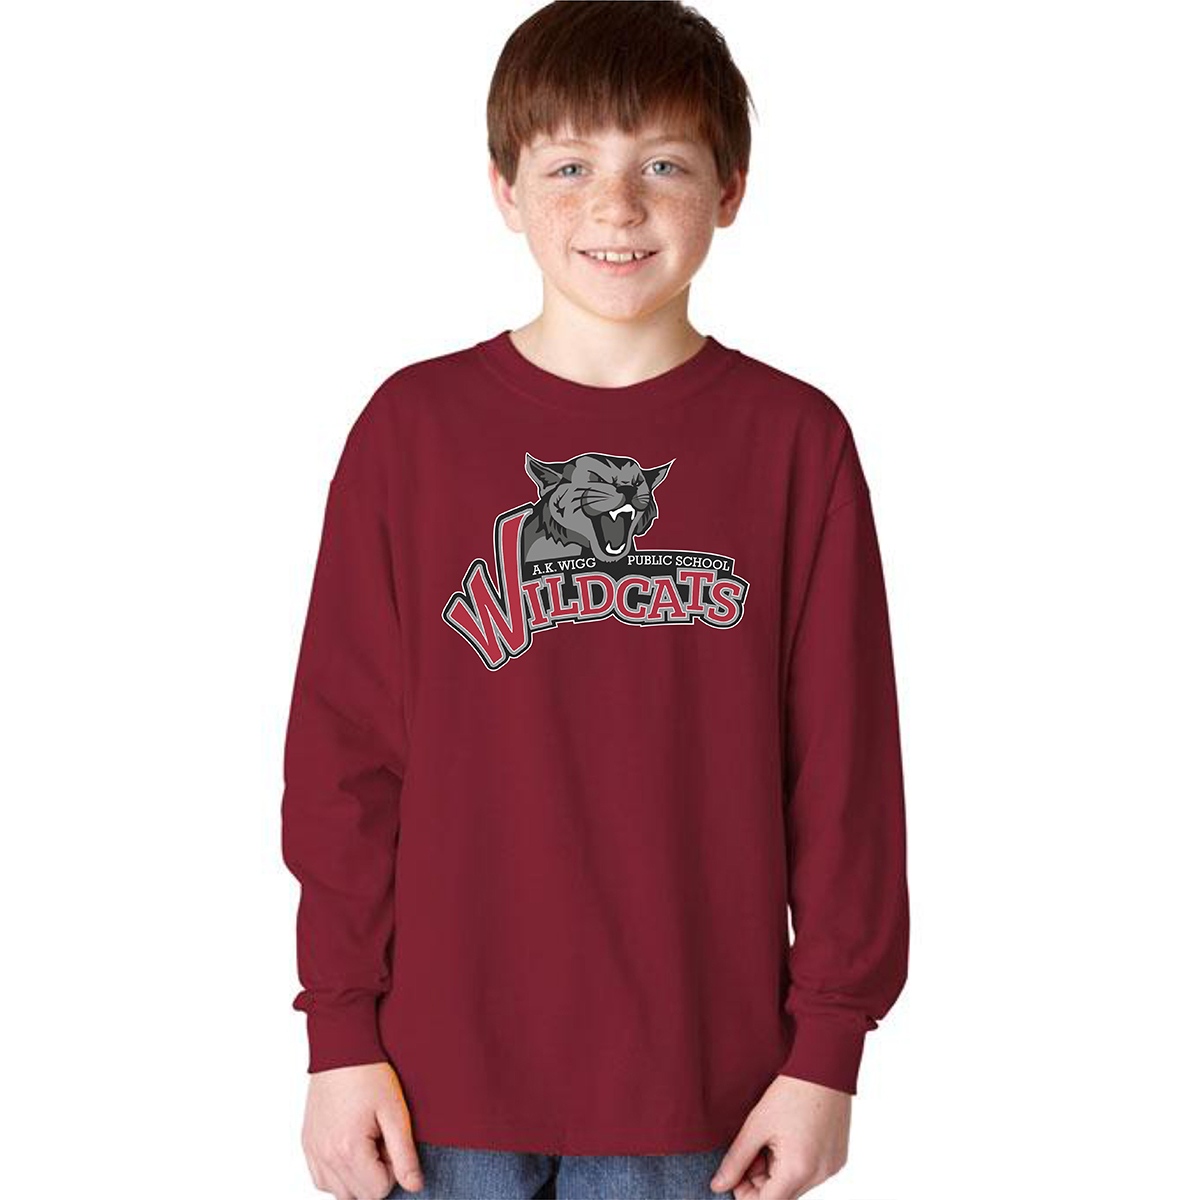 A.K. Wigg Wildcats Youth ATC Brand 100% Cotton Long Sleeve T-Shirt ...